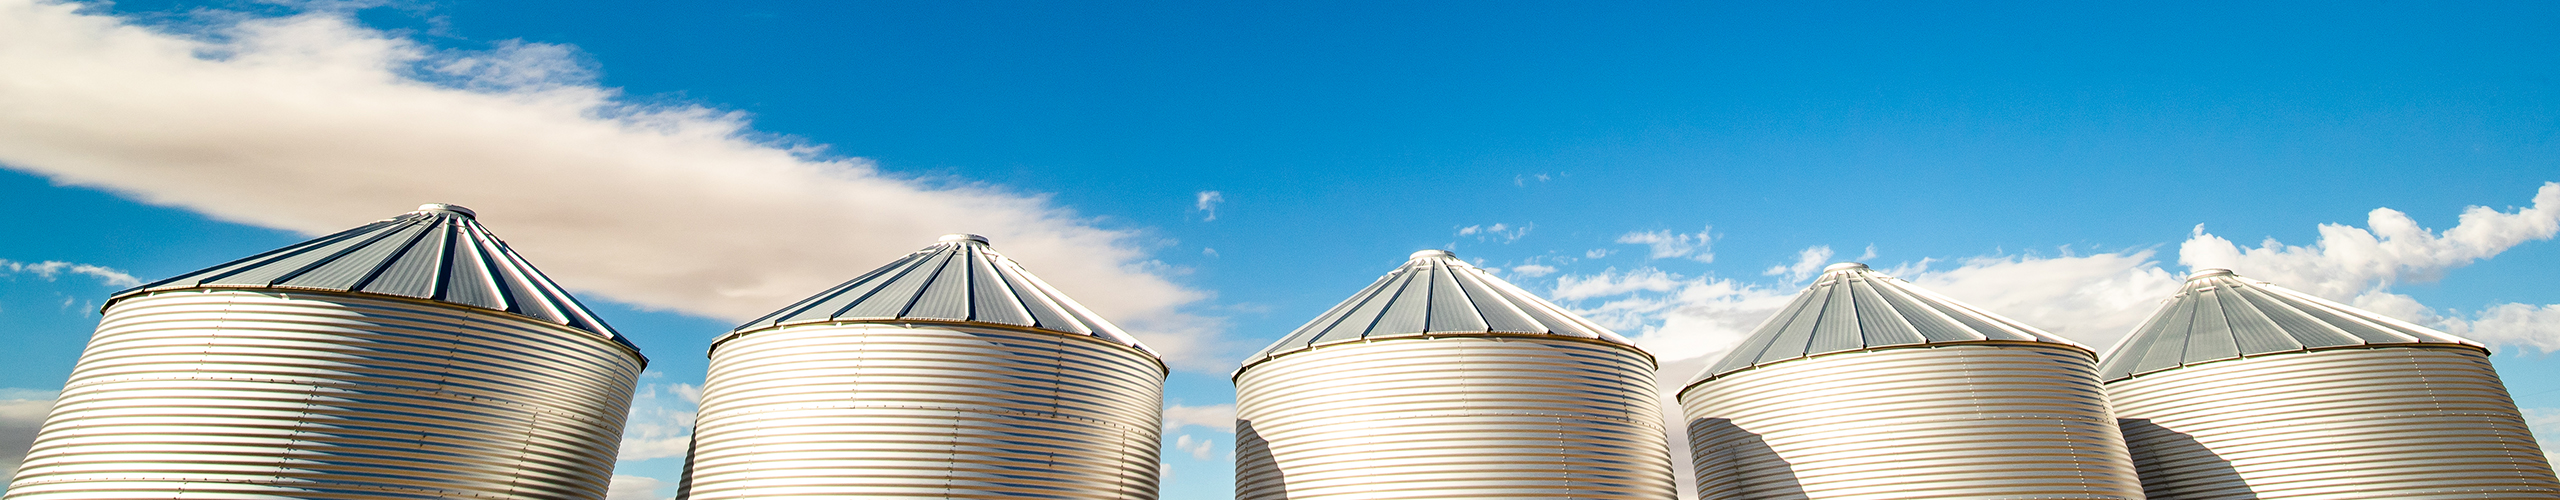 Top of grain bins against a bright blue sky